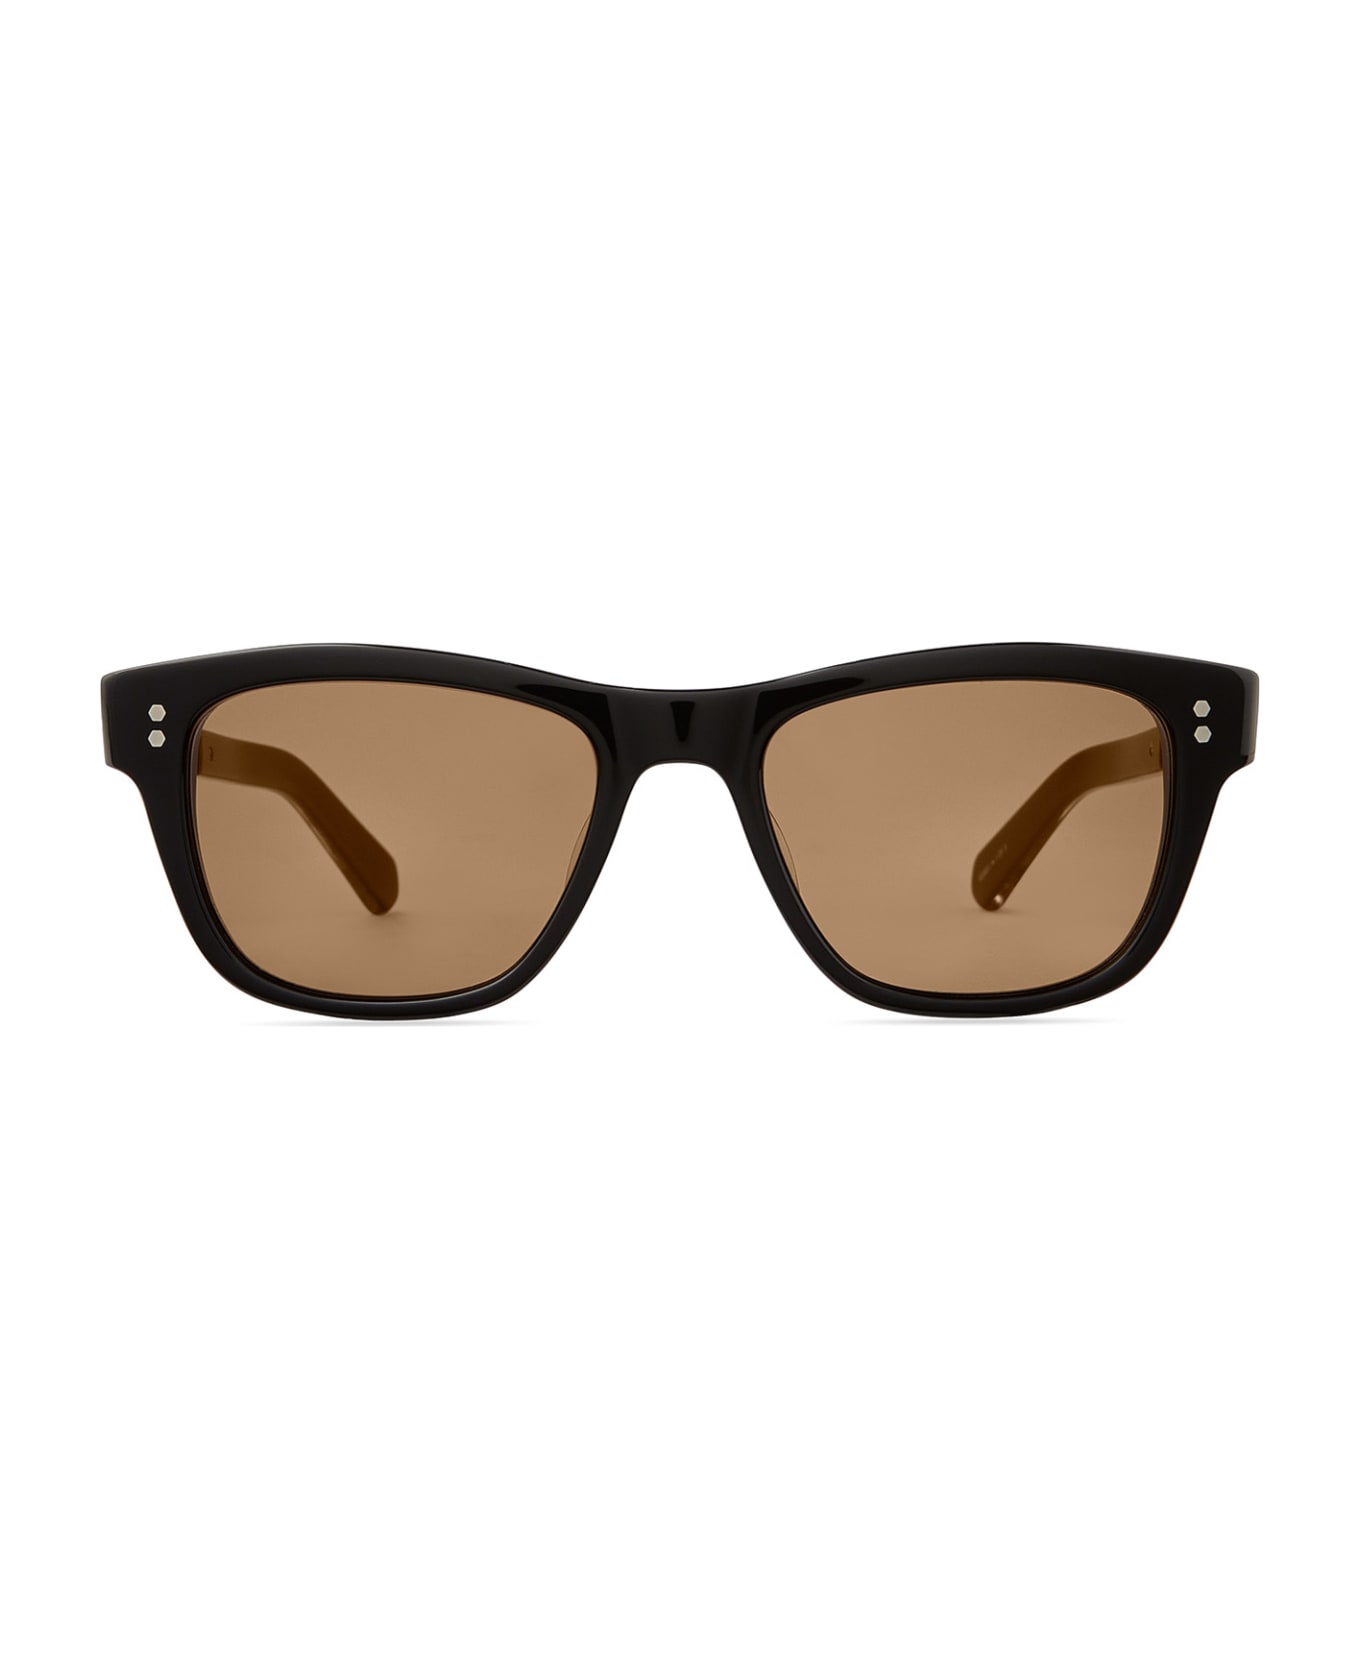 Mr. Leight Damone S Black-gunmetal/mojave Brown Polar Sunglasses - Black-Gunmetal/Mojave Brown Polar サングラス